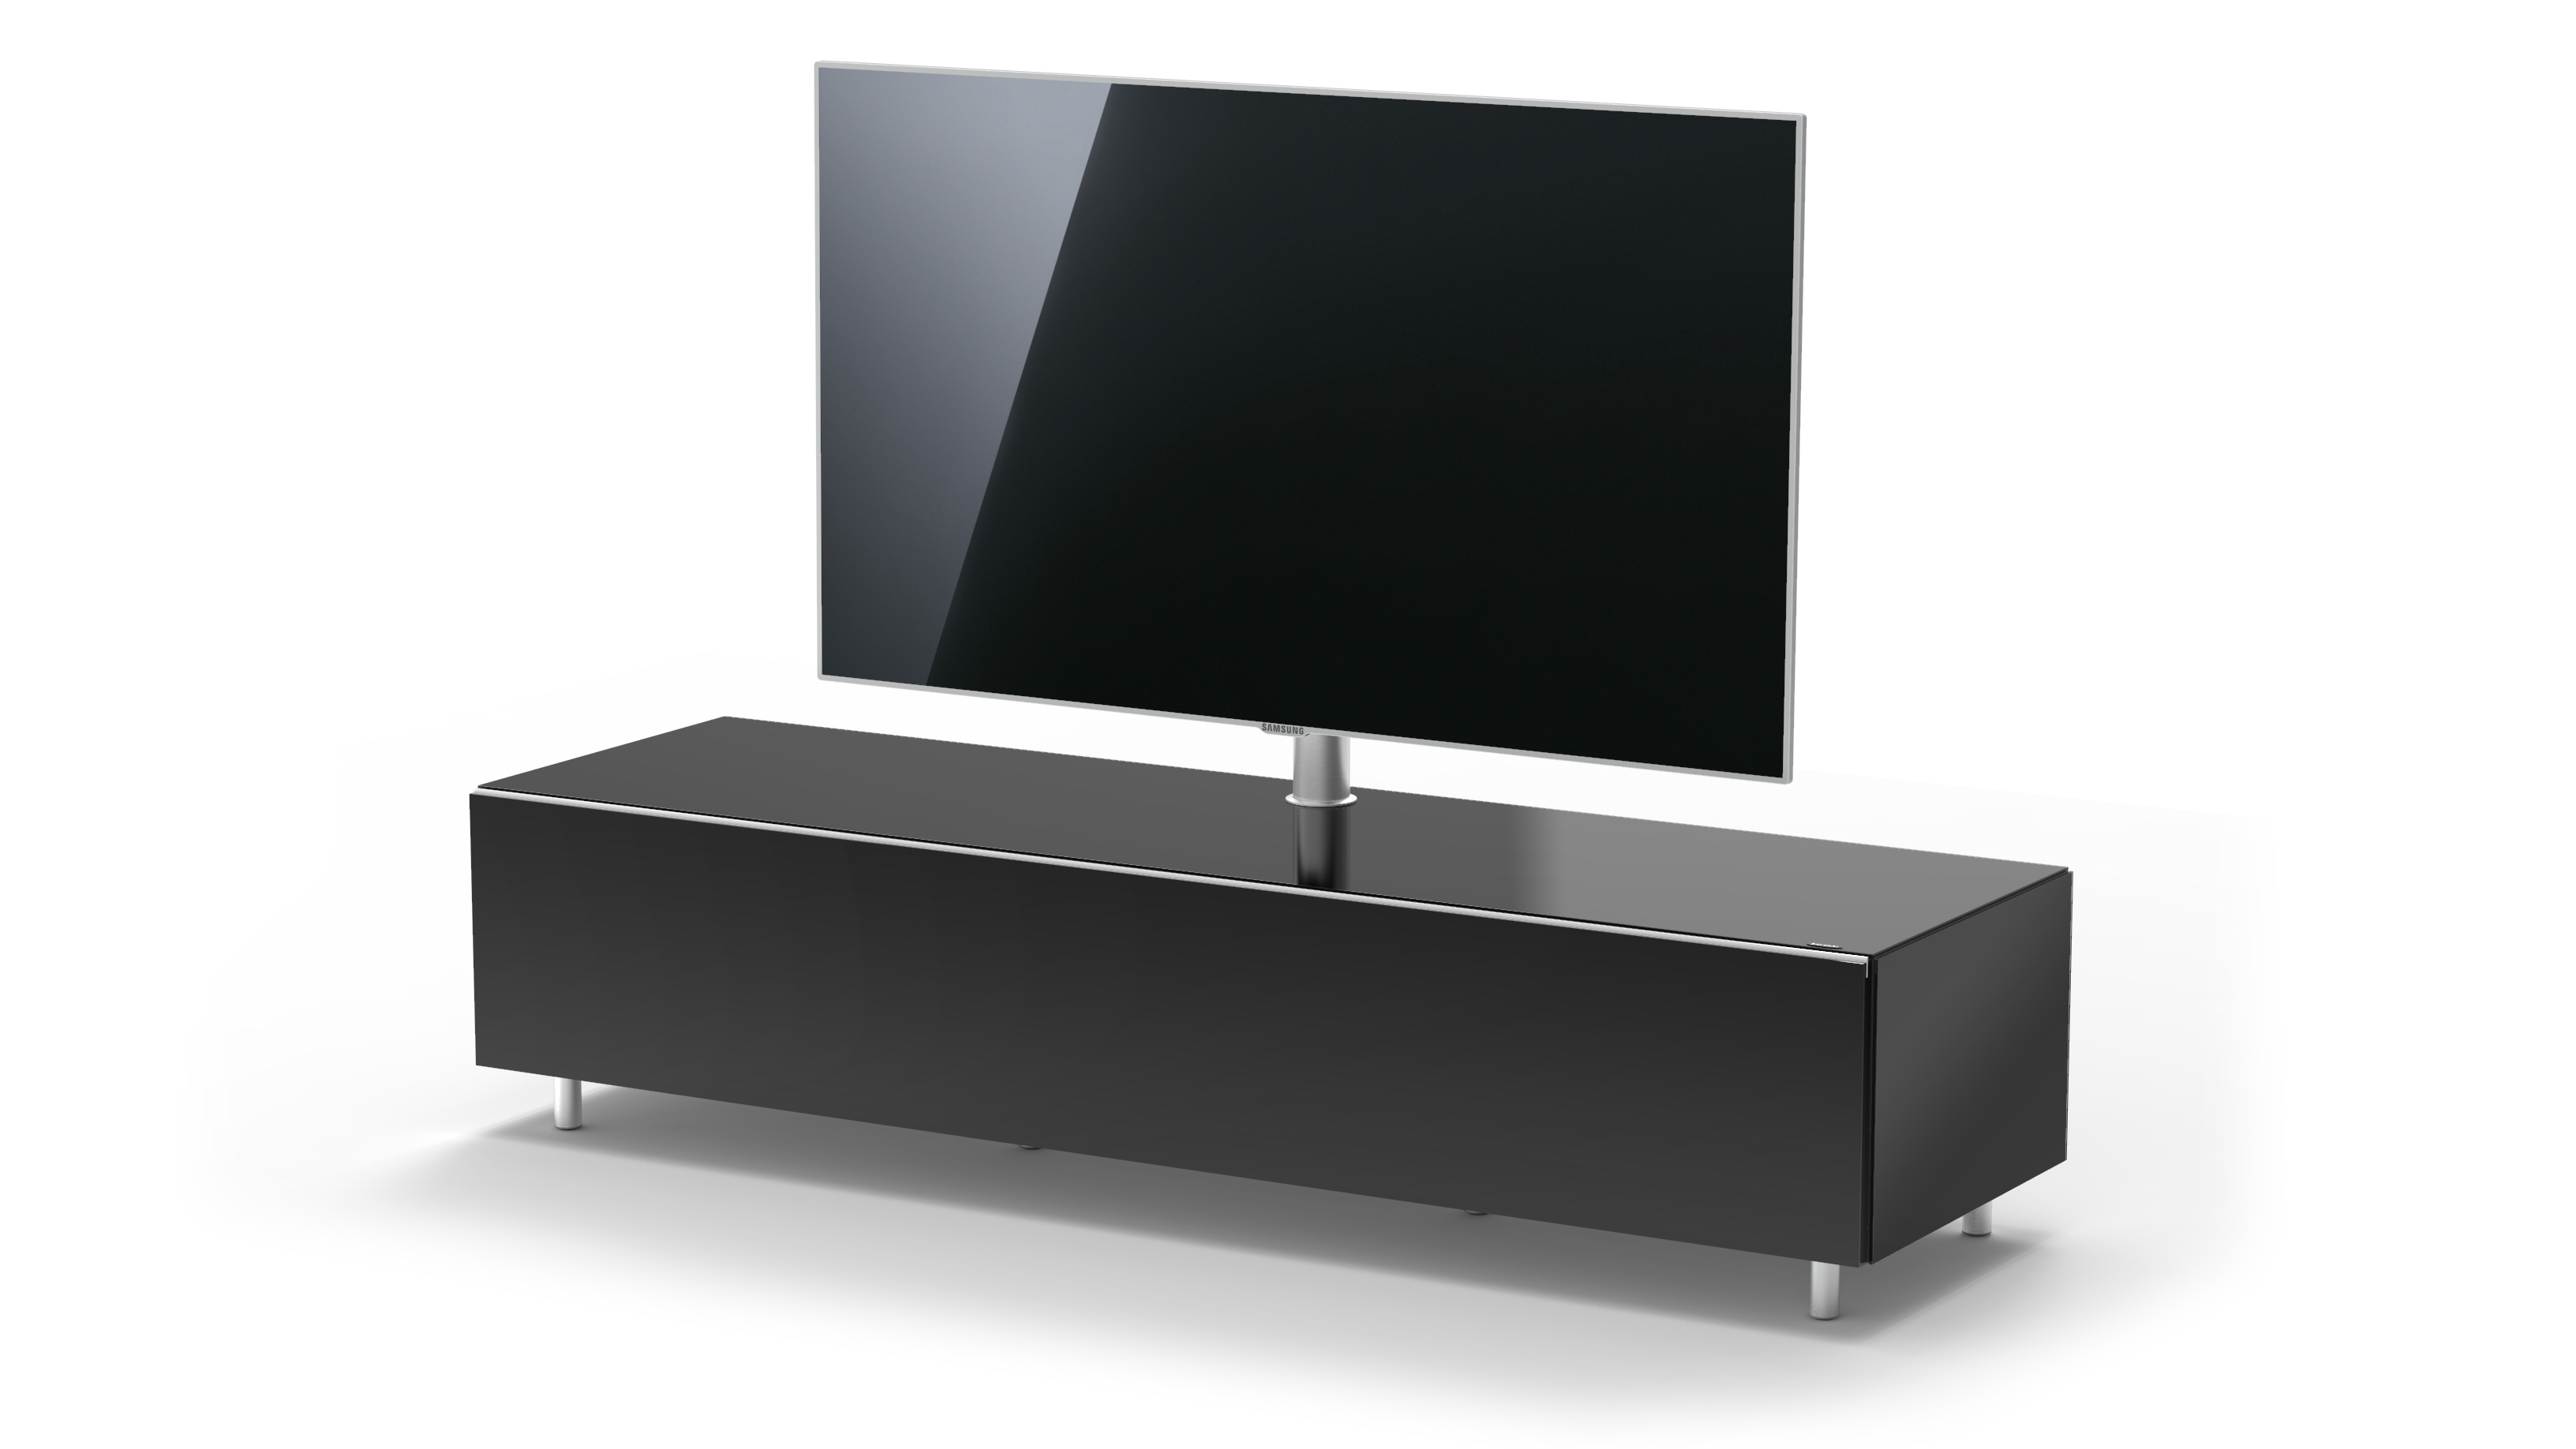 TV-Lowboard TV-Lowboard JUST mit Black. SPECTRAL 1650T VESA400. JRL 165cm. TV-Halterung BY Breite